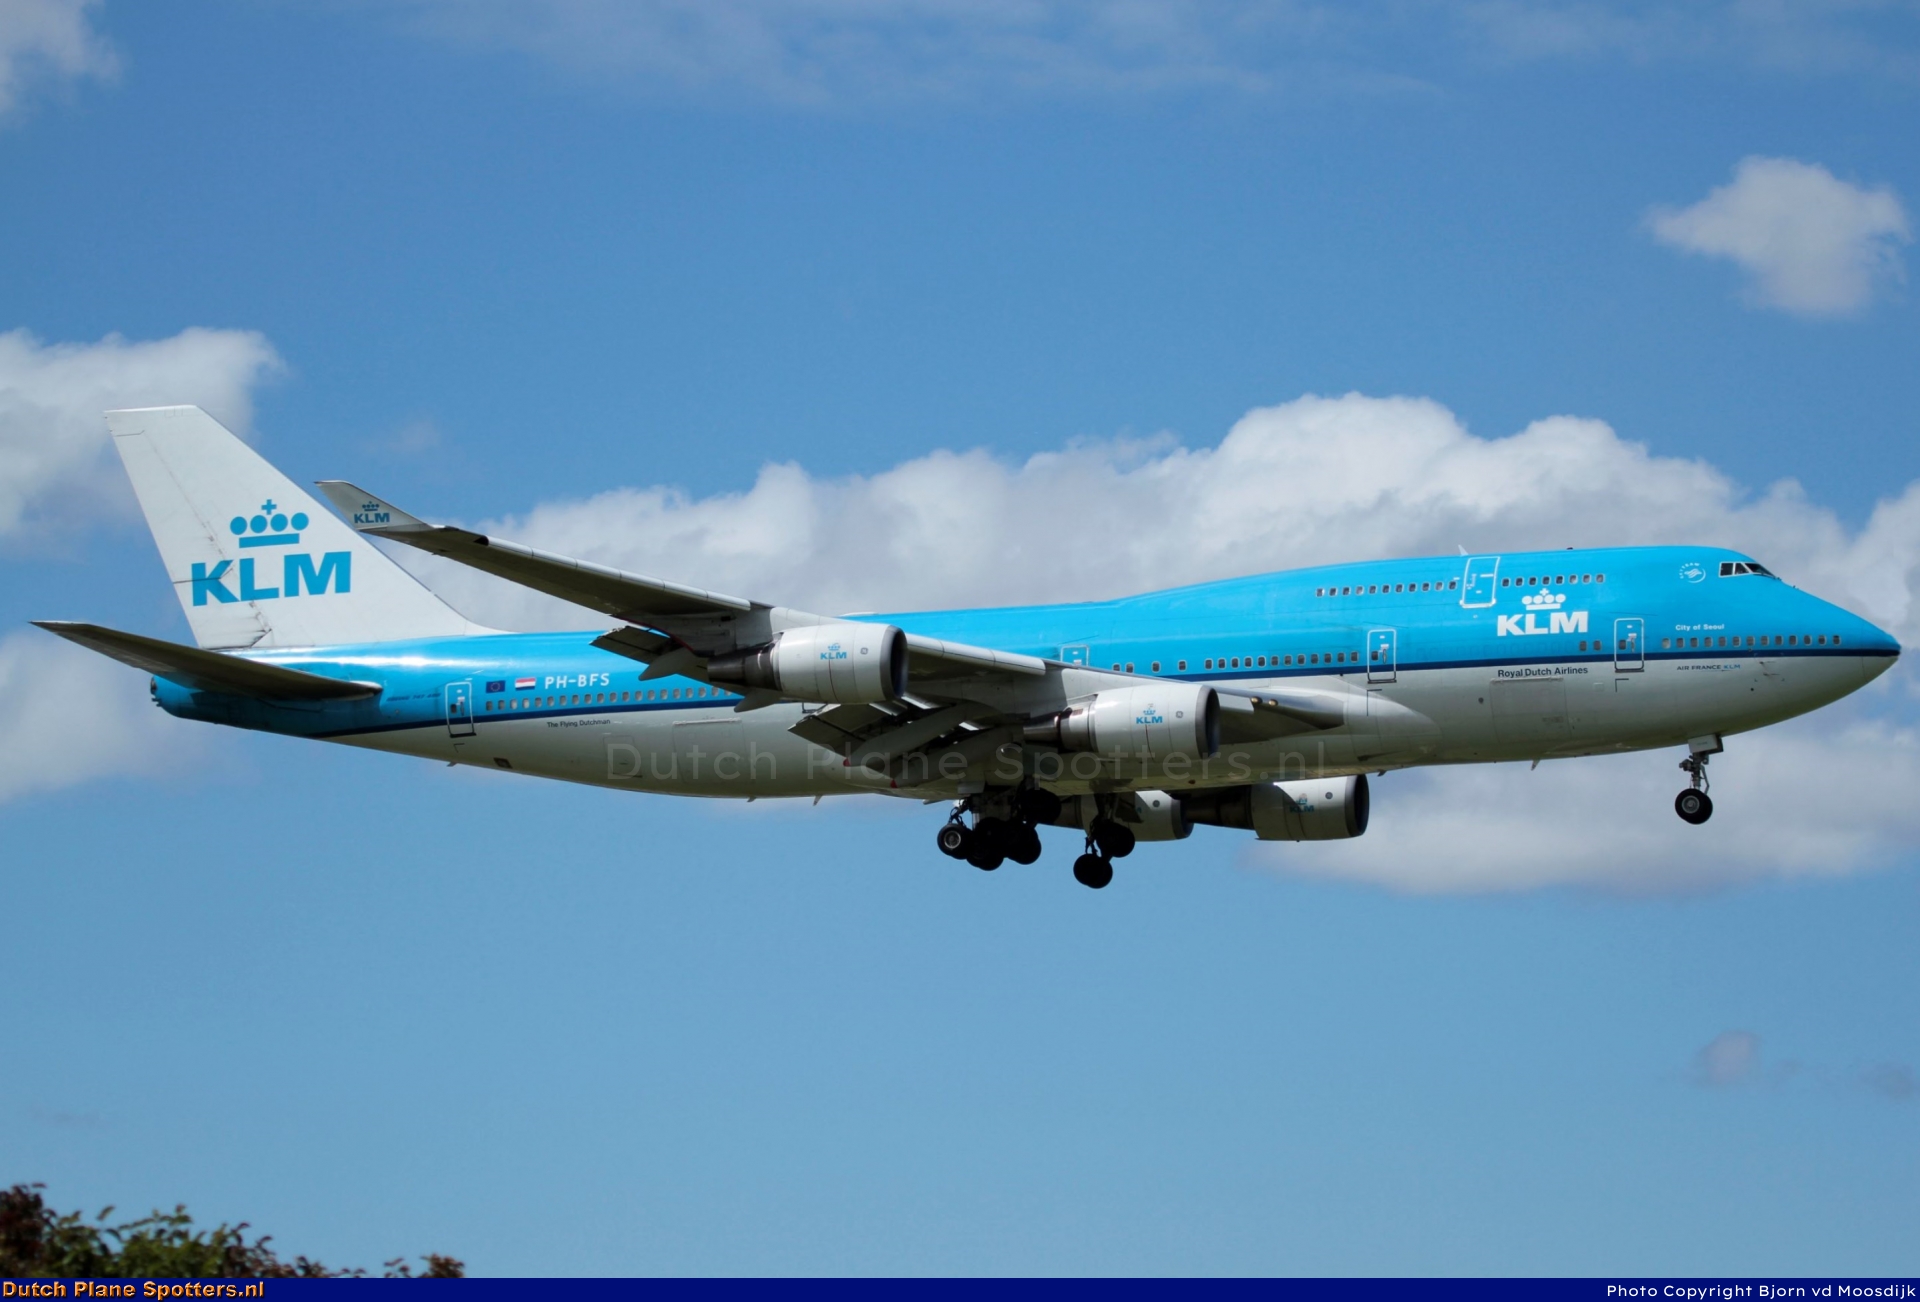 PH-BFS Boeing 747-400 KLM Royal Dutch Airlines by Bjorn van de Moosdijk